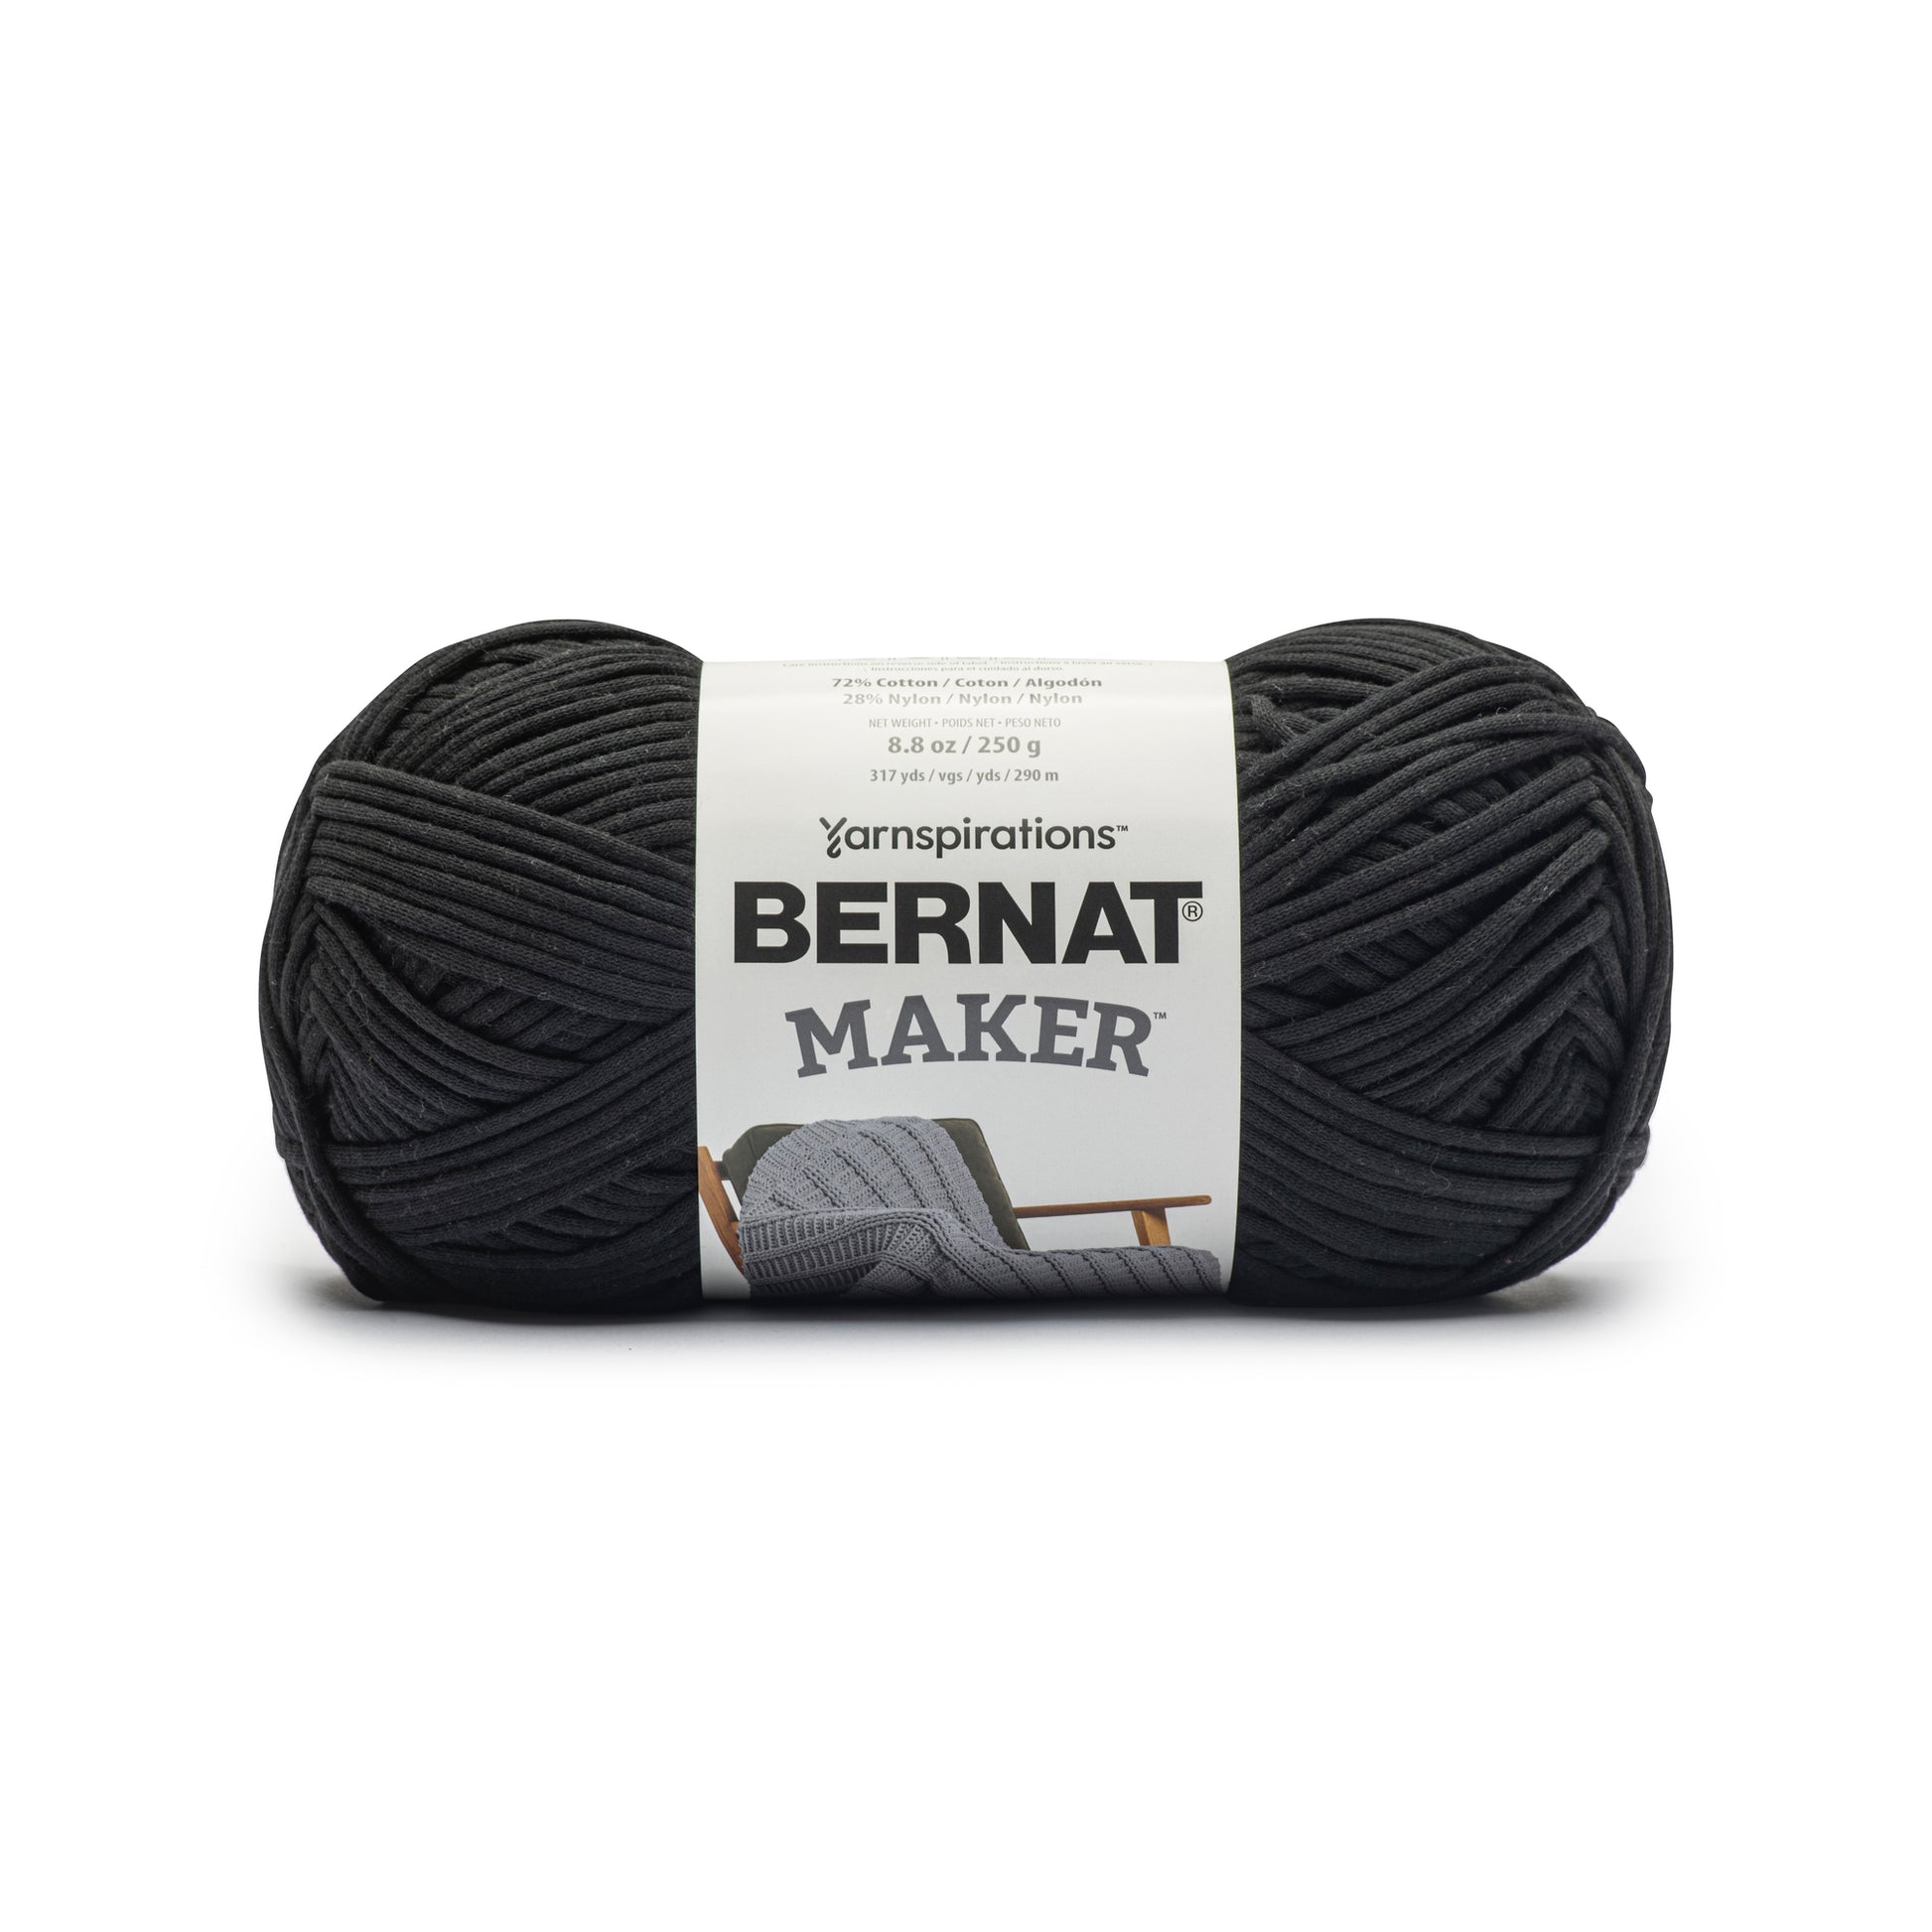 Bernat Maker Yarn (250g/8.8oz) Black